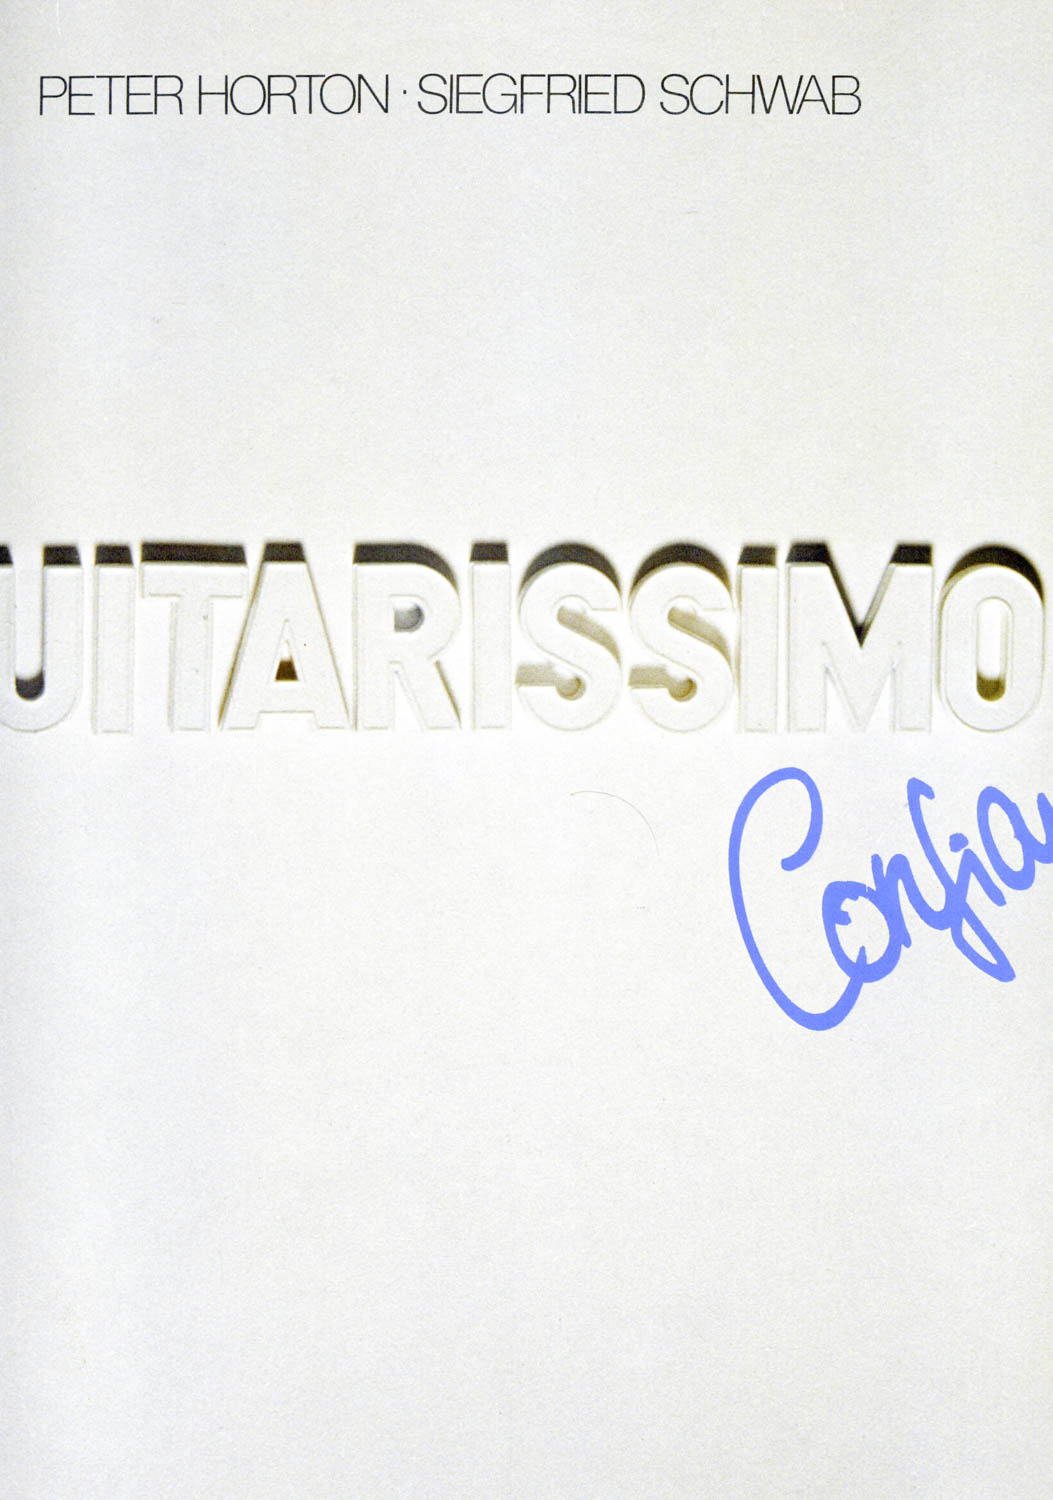 Siegfried Schwab, Peter Horton  Guitarissimo Confiana (0060.314)  *LP 12'' (Vinyl)*. 